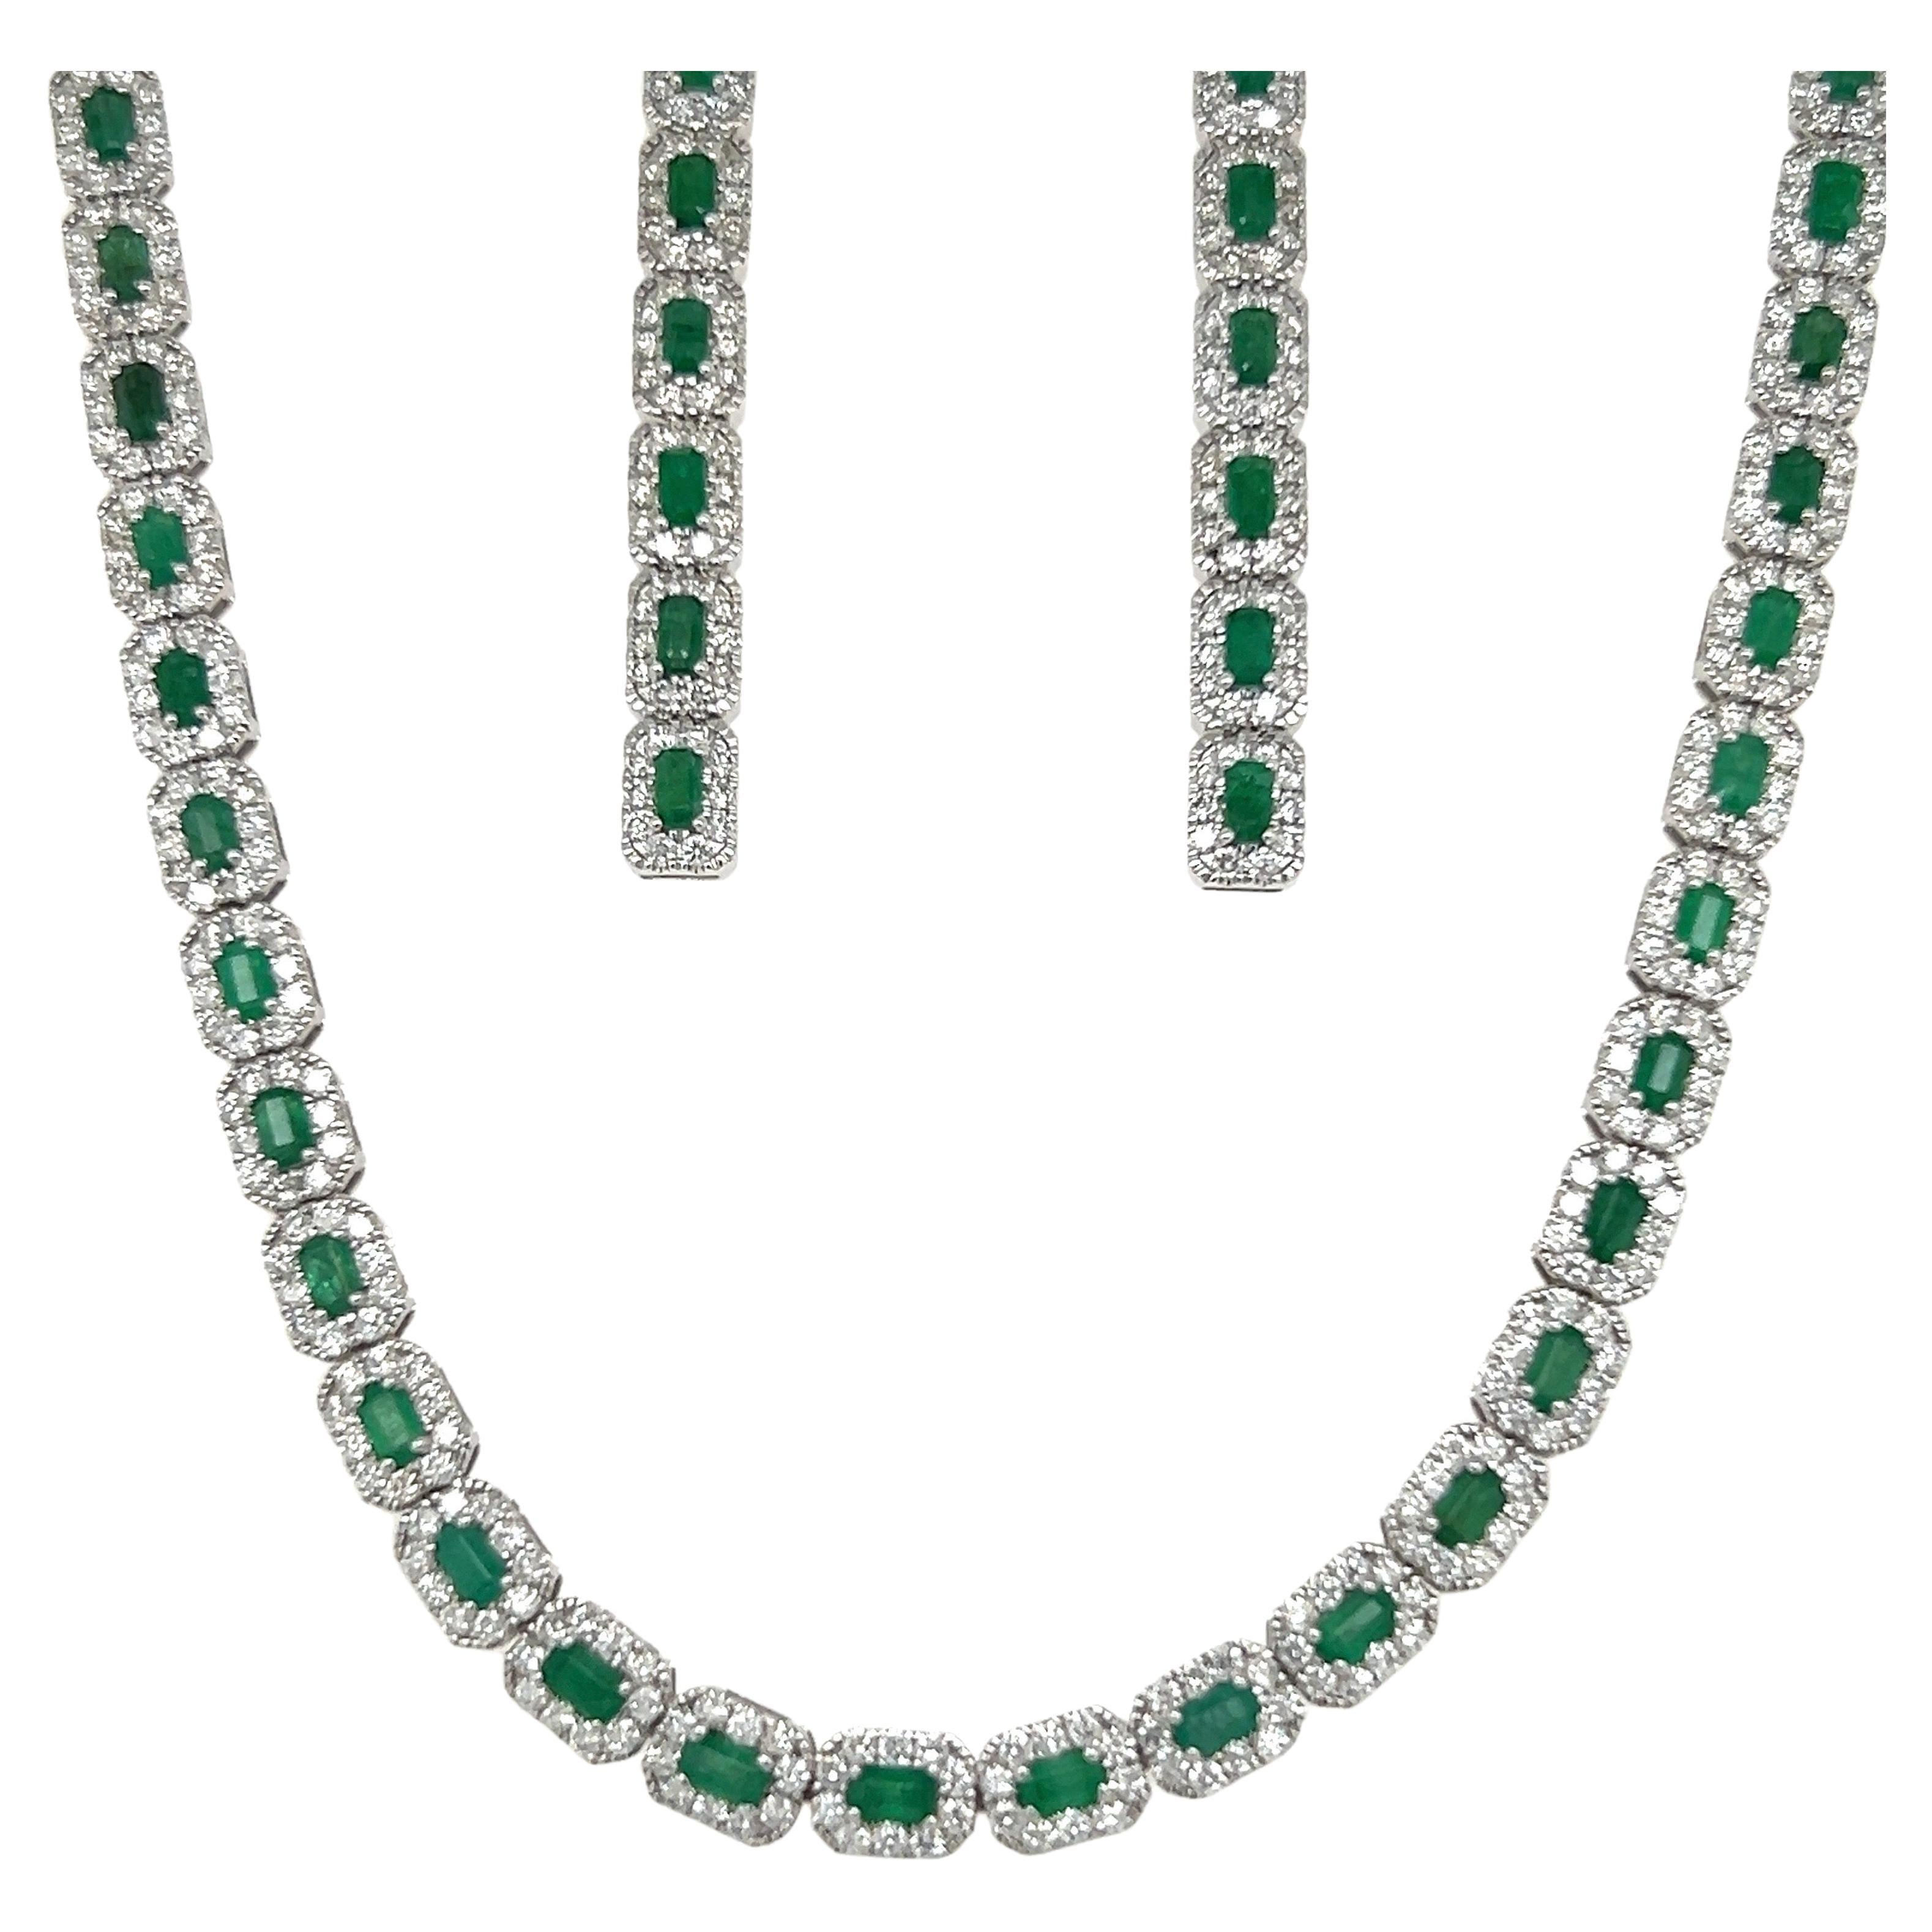 5.80 Carat Emerald Necklace Earrings Set